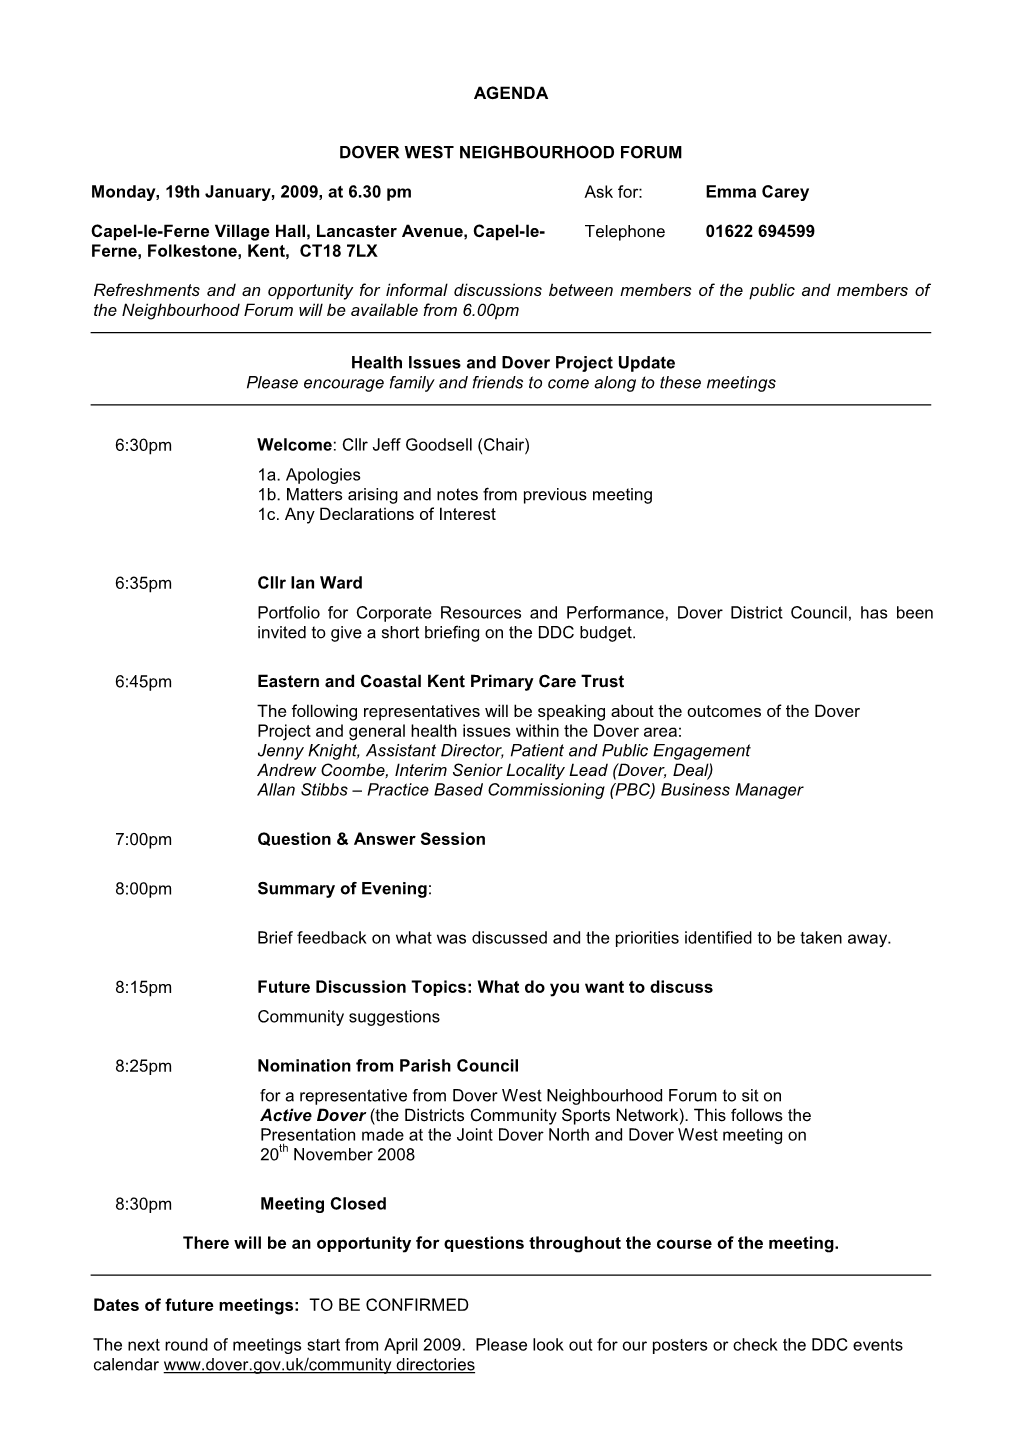 Agenda Frontsheet PDF 137 KB